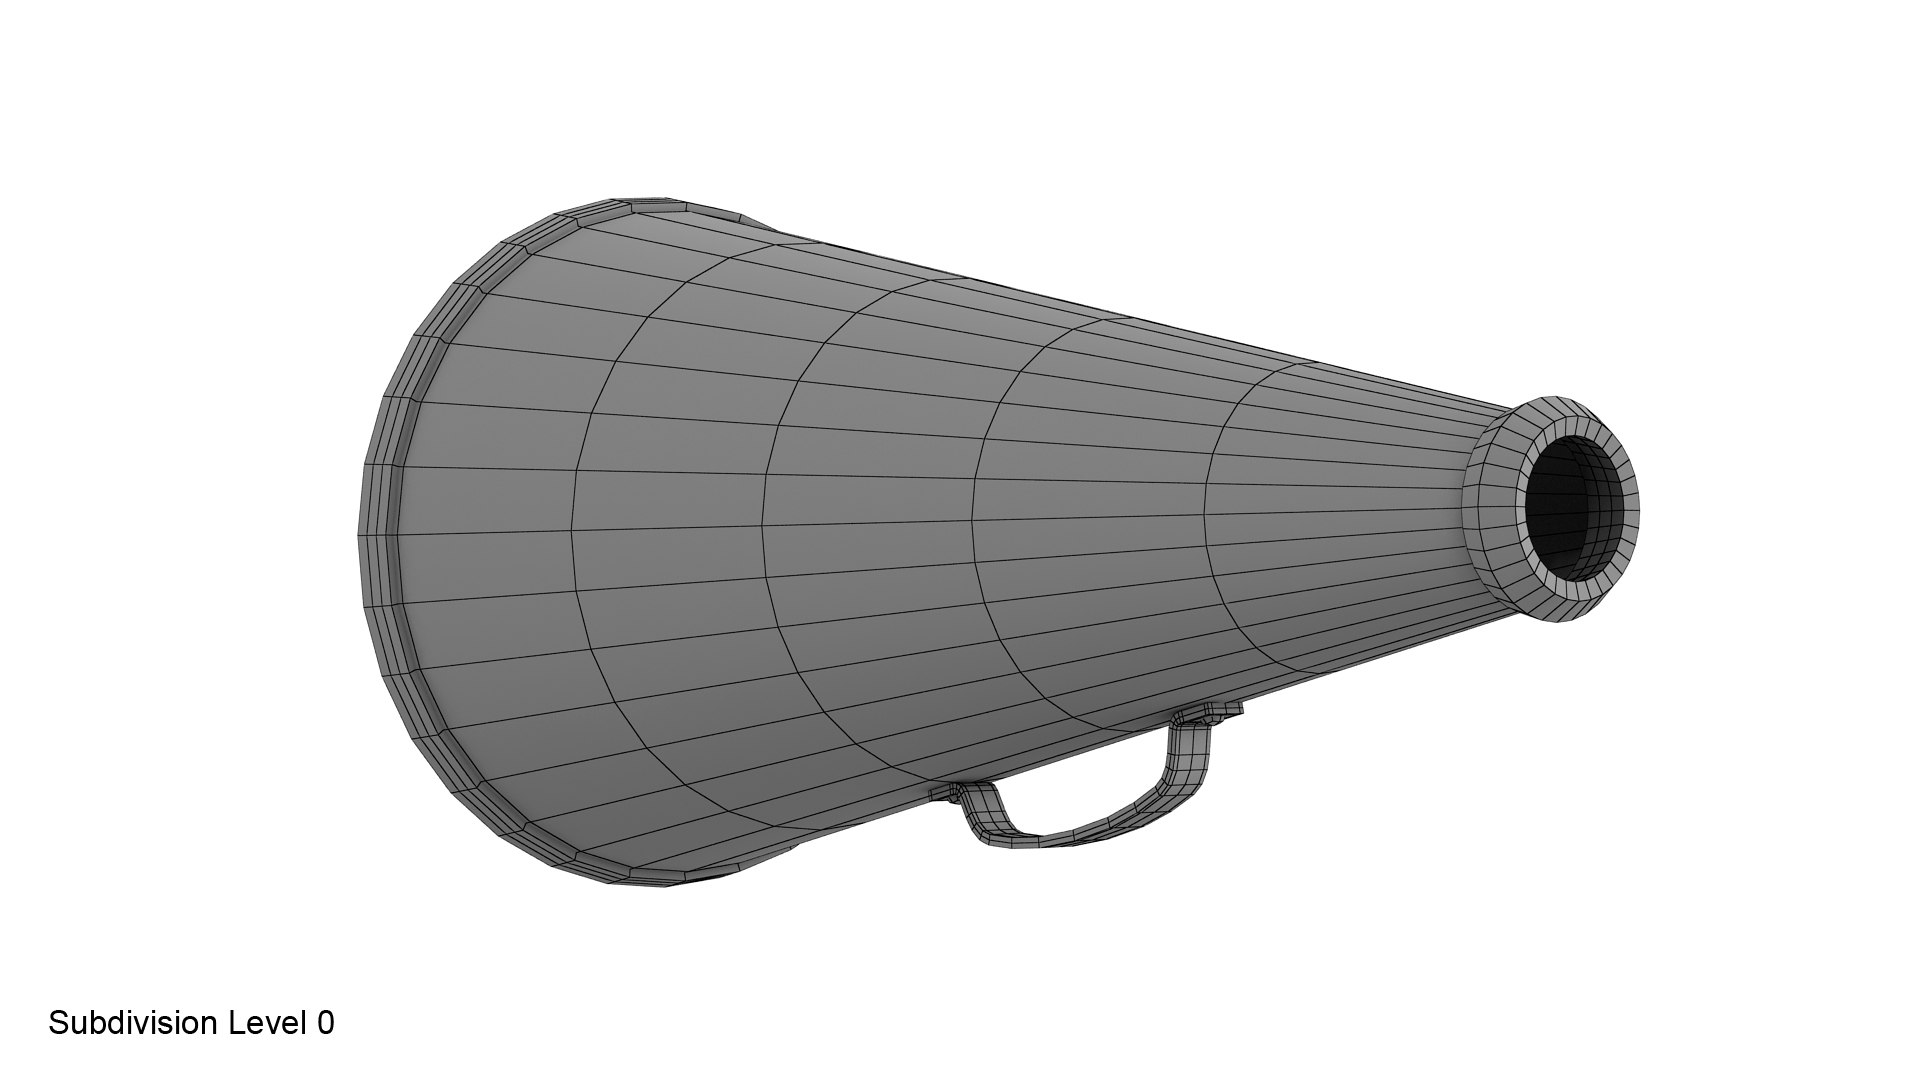 Megaphone bullhorn 3D model - TurboSquid 1621896